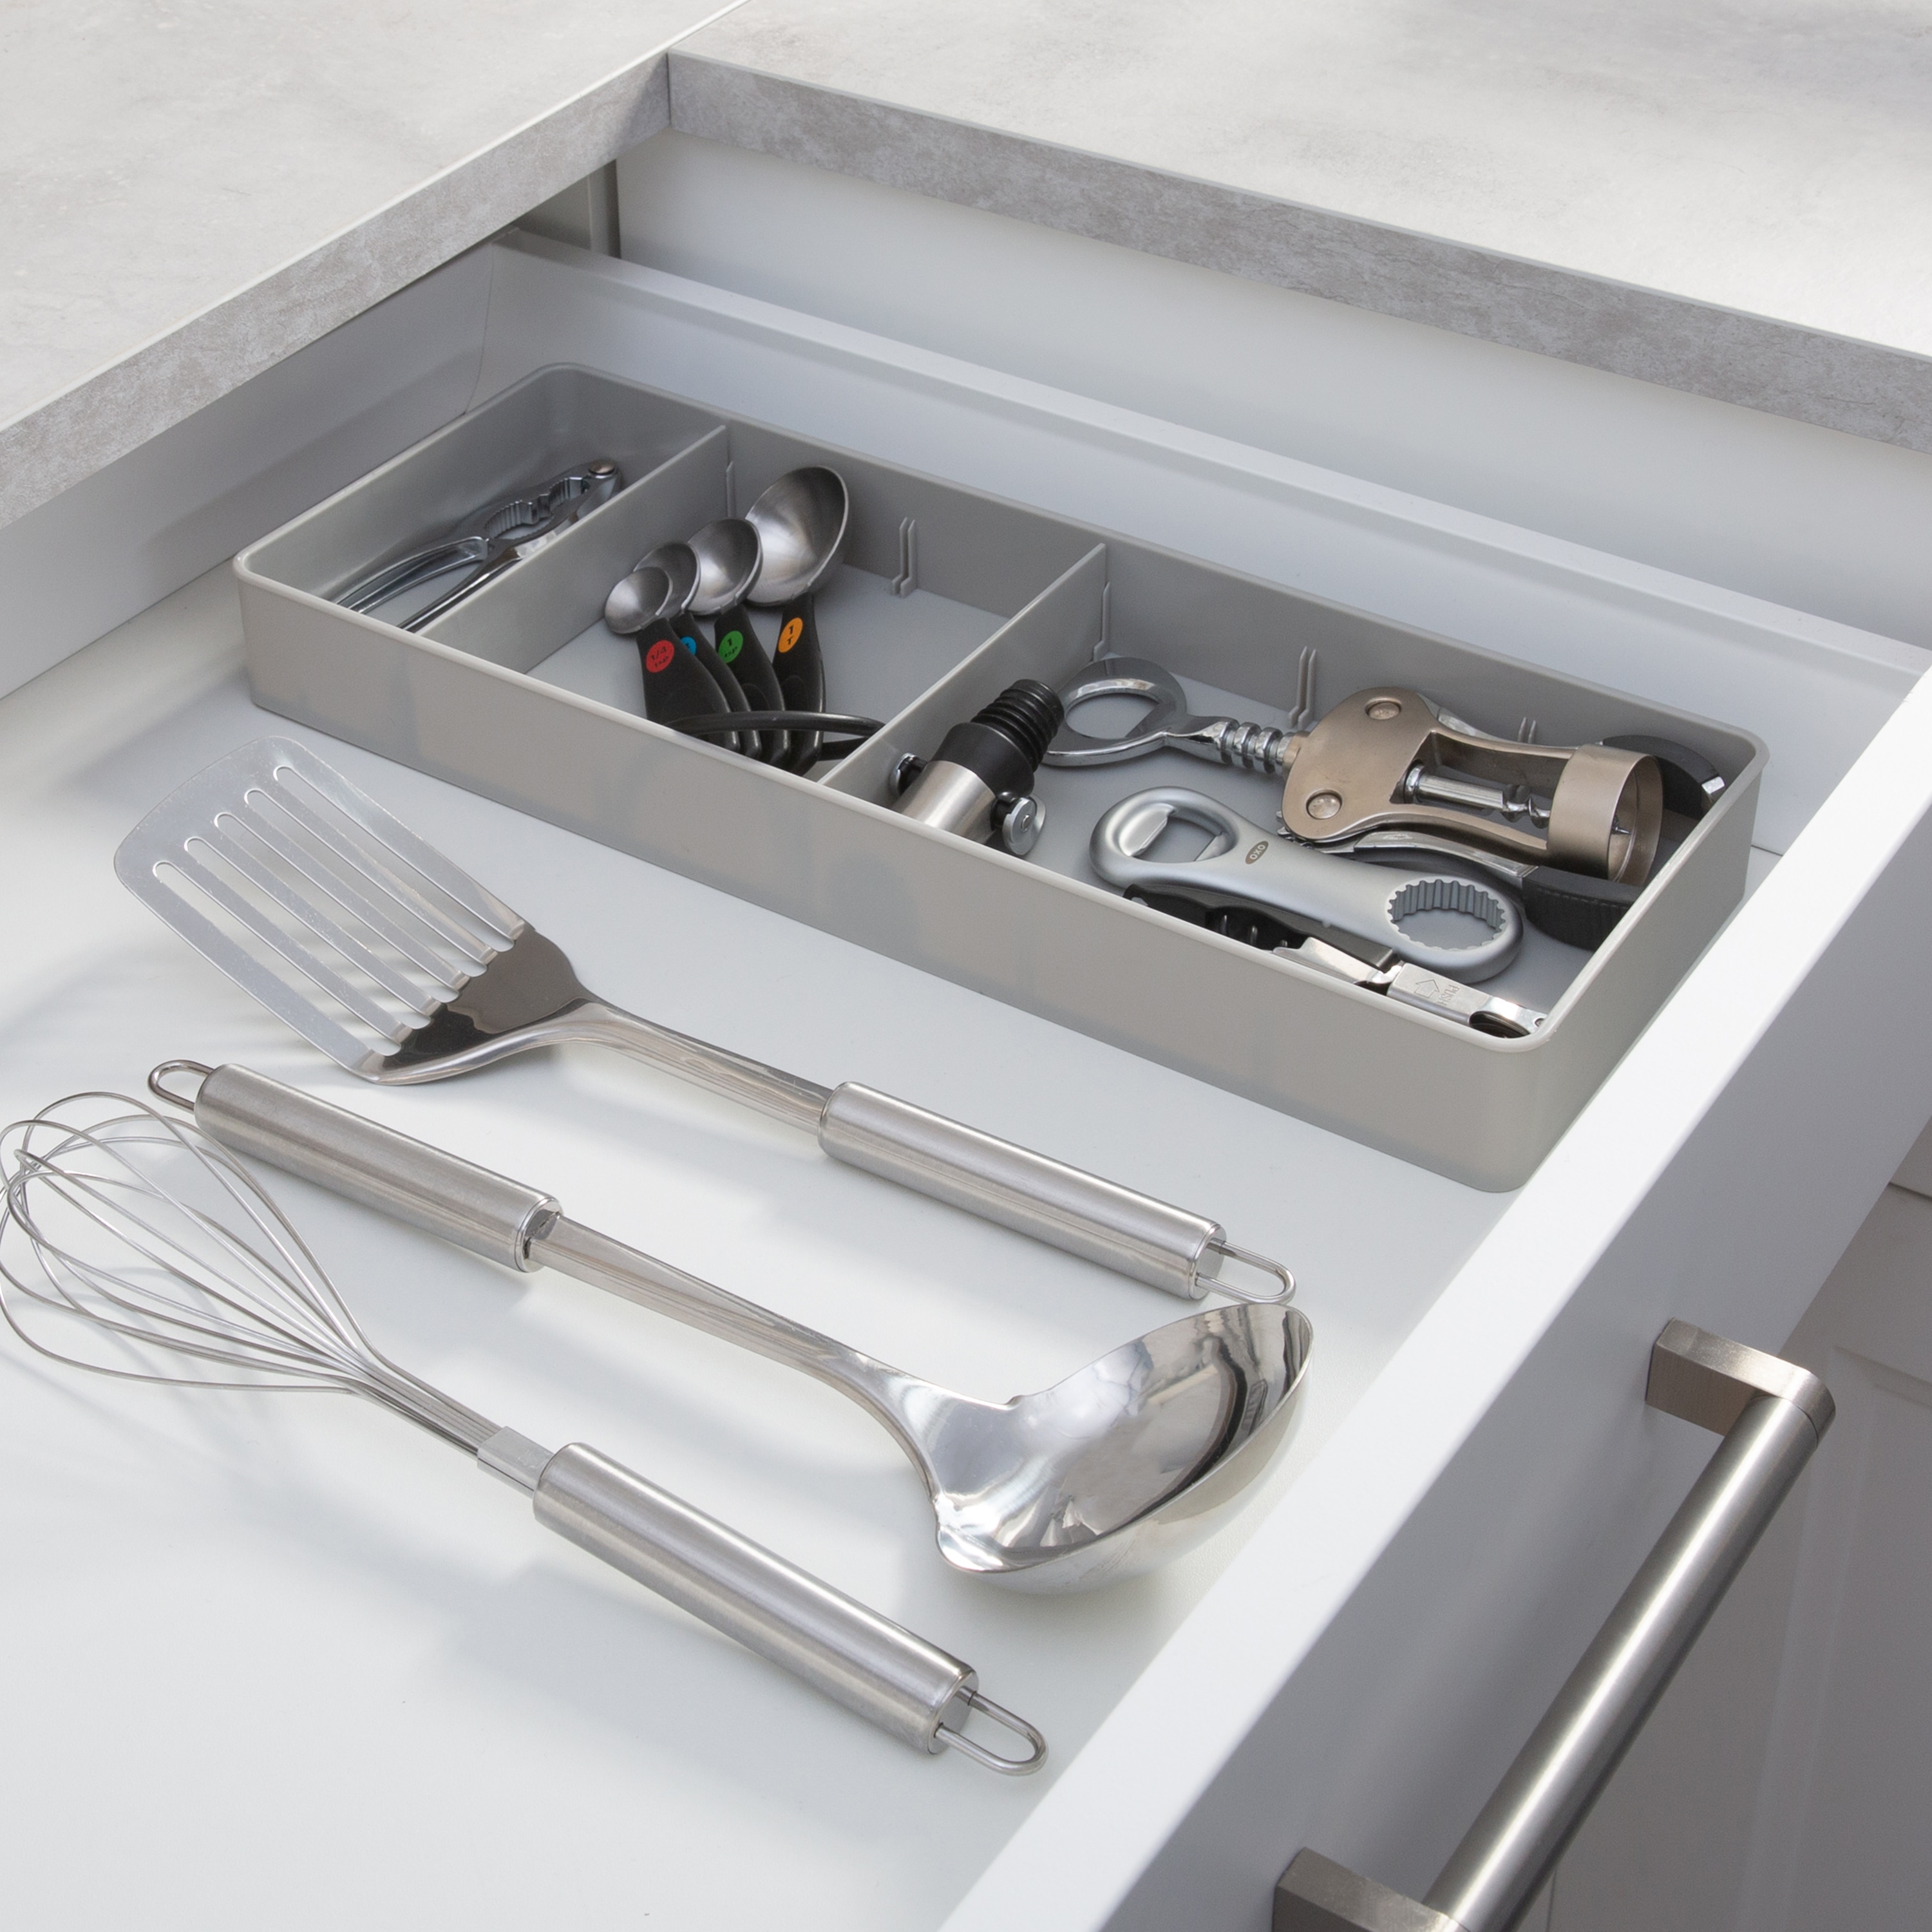  OXO Good Grips Drawer, Expandable Kitchen Tool Organizer,  White: Home & Kitchen